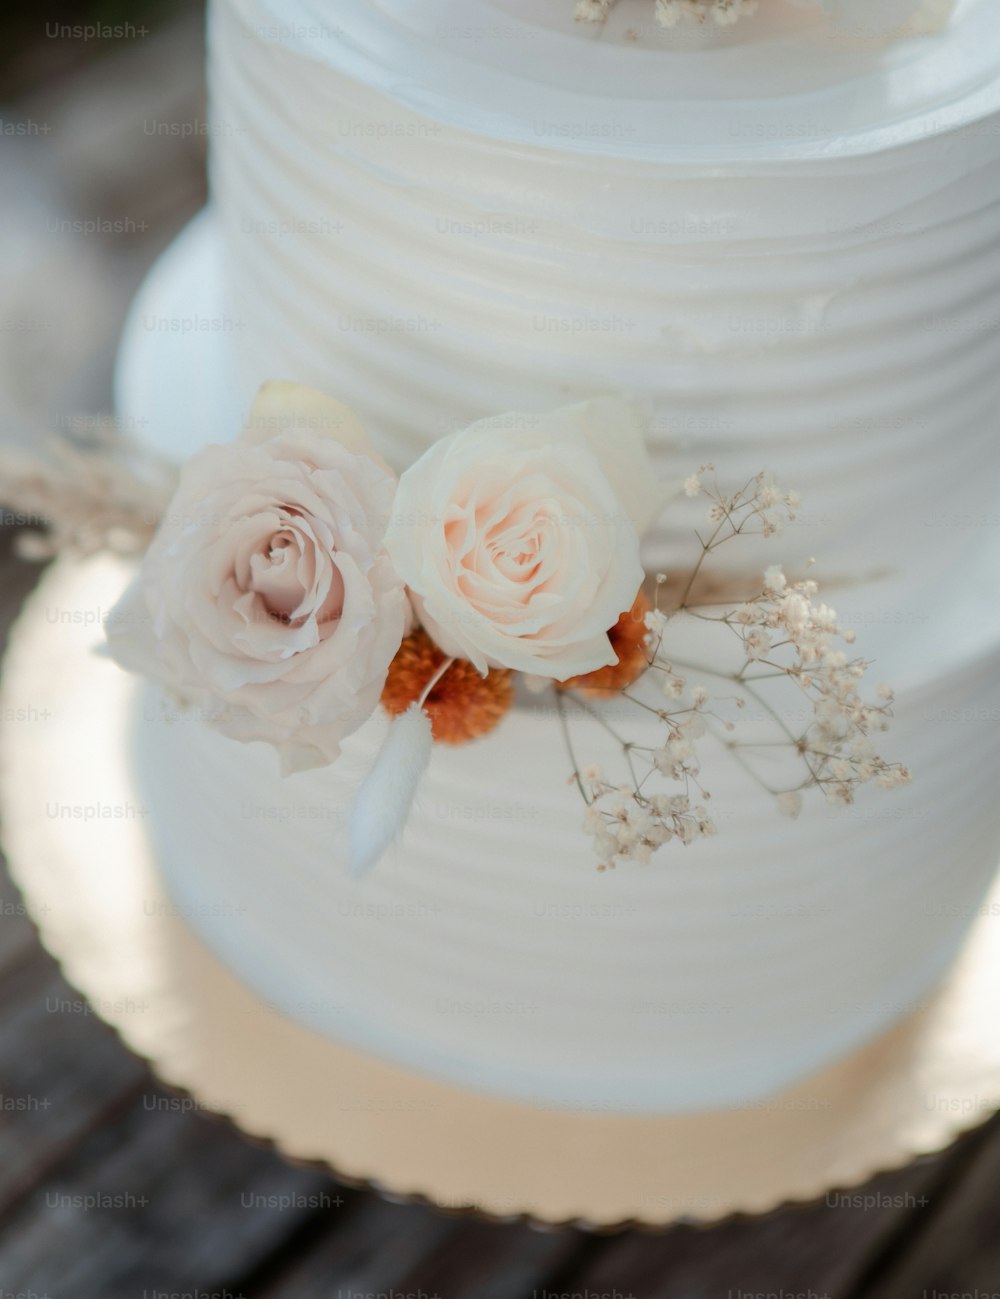 Flower Cake Pictures | Download Free Images on Unsplash